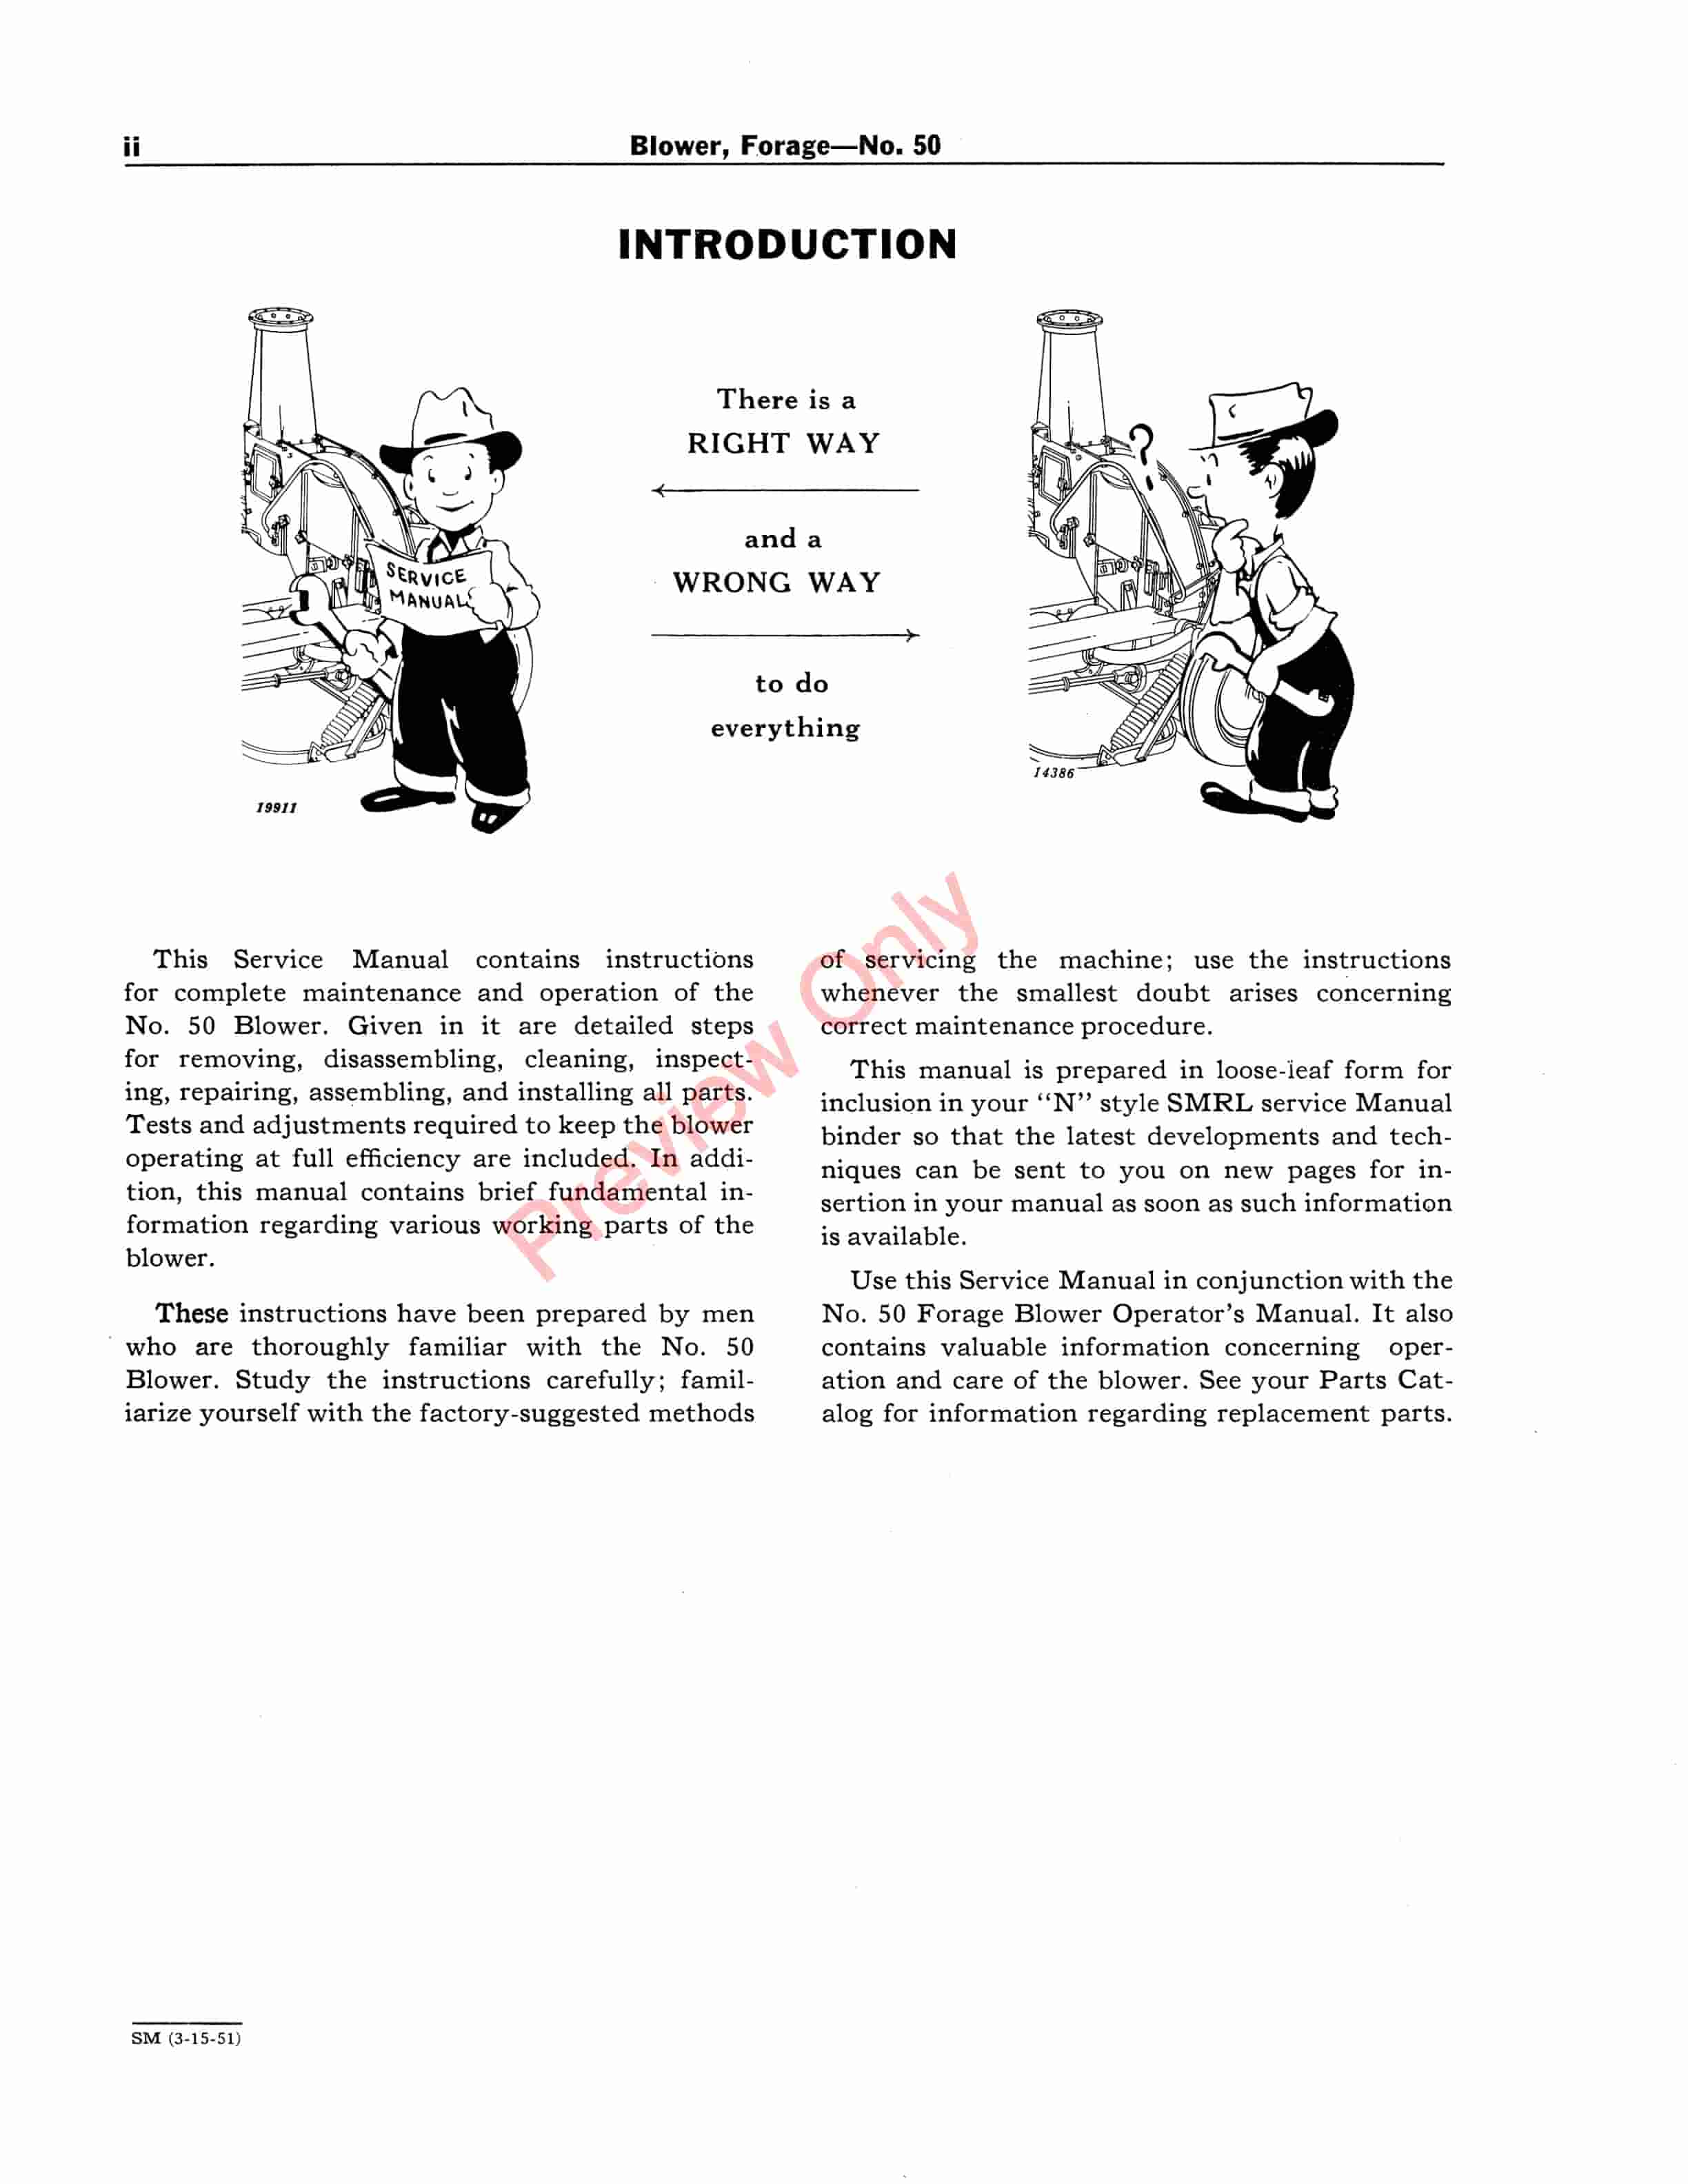 John Deere 50 Forage Blower Service Manual SM2006 01MAR51-4